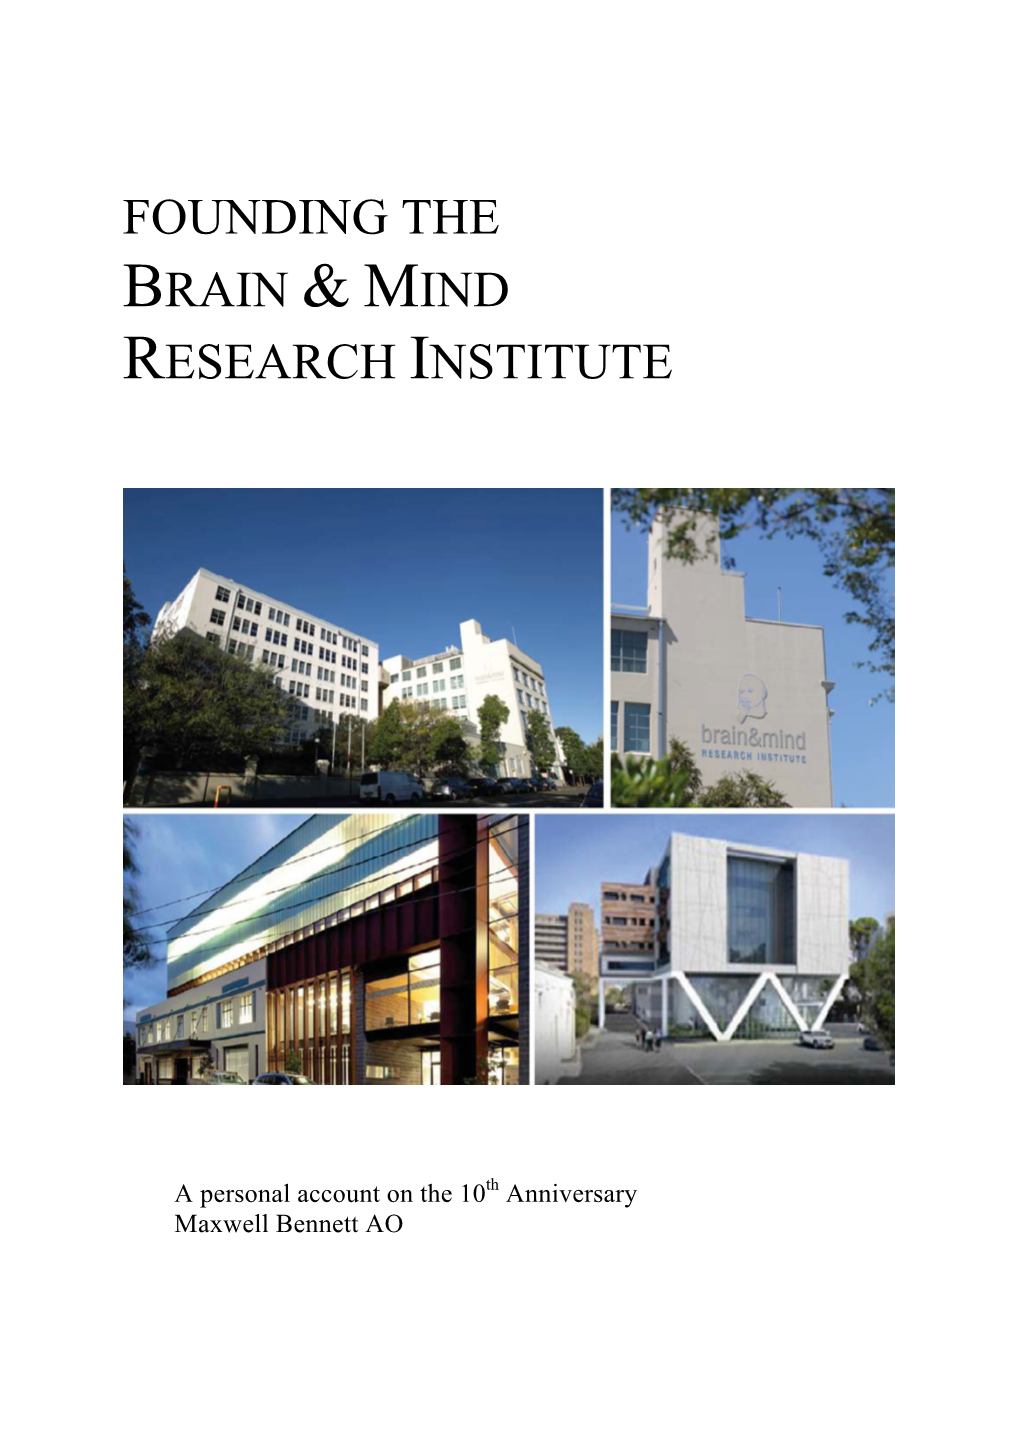 Founding the Brain & Mind Research Institute